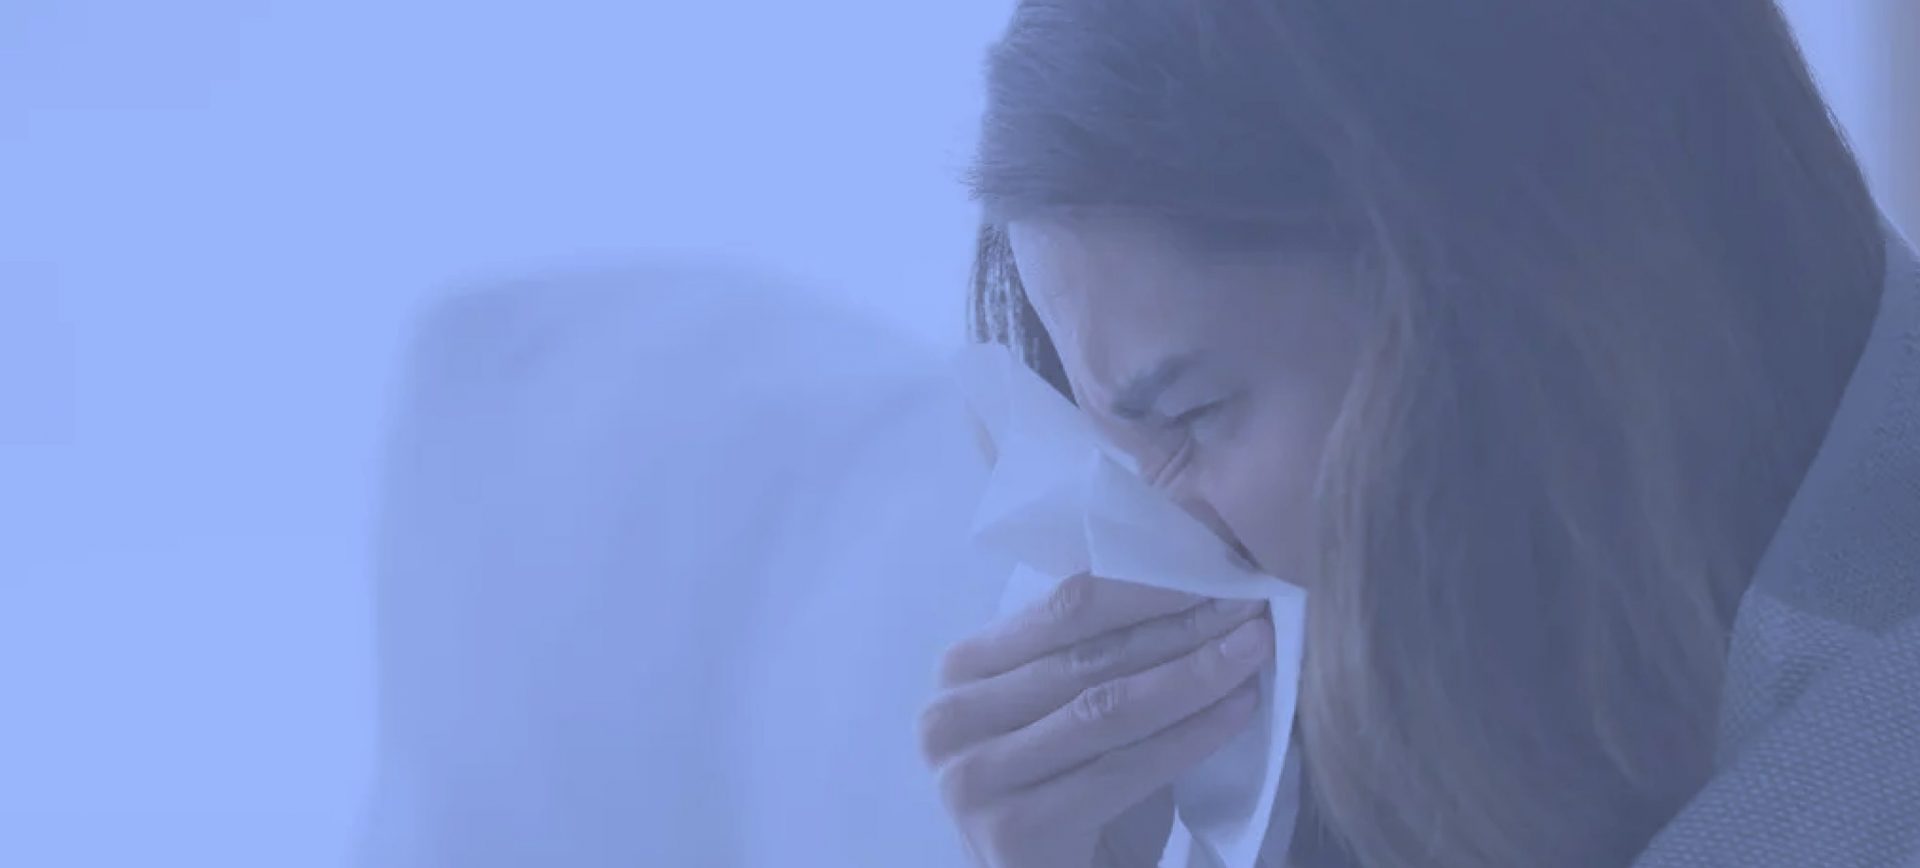 mulher assoando nariz - gripe h3n2